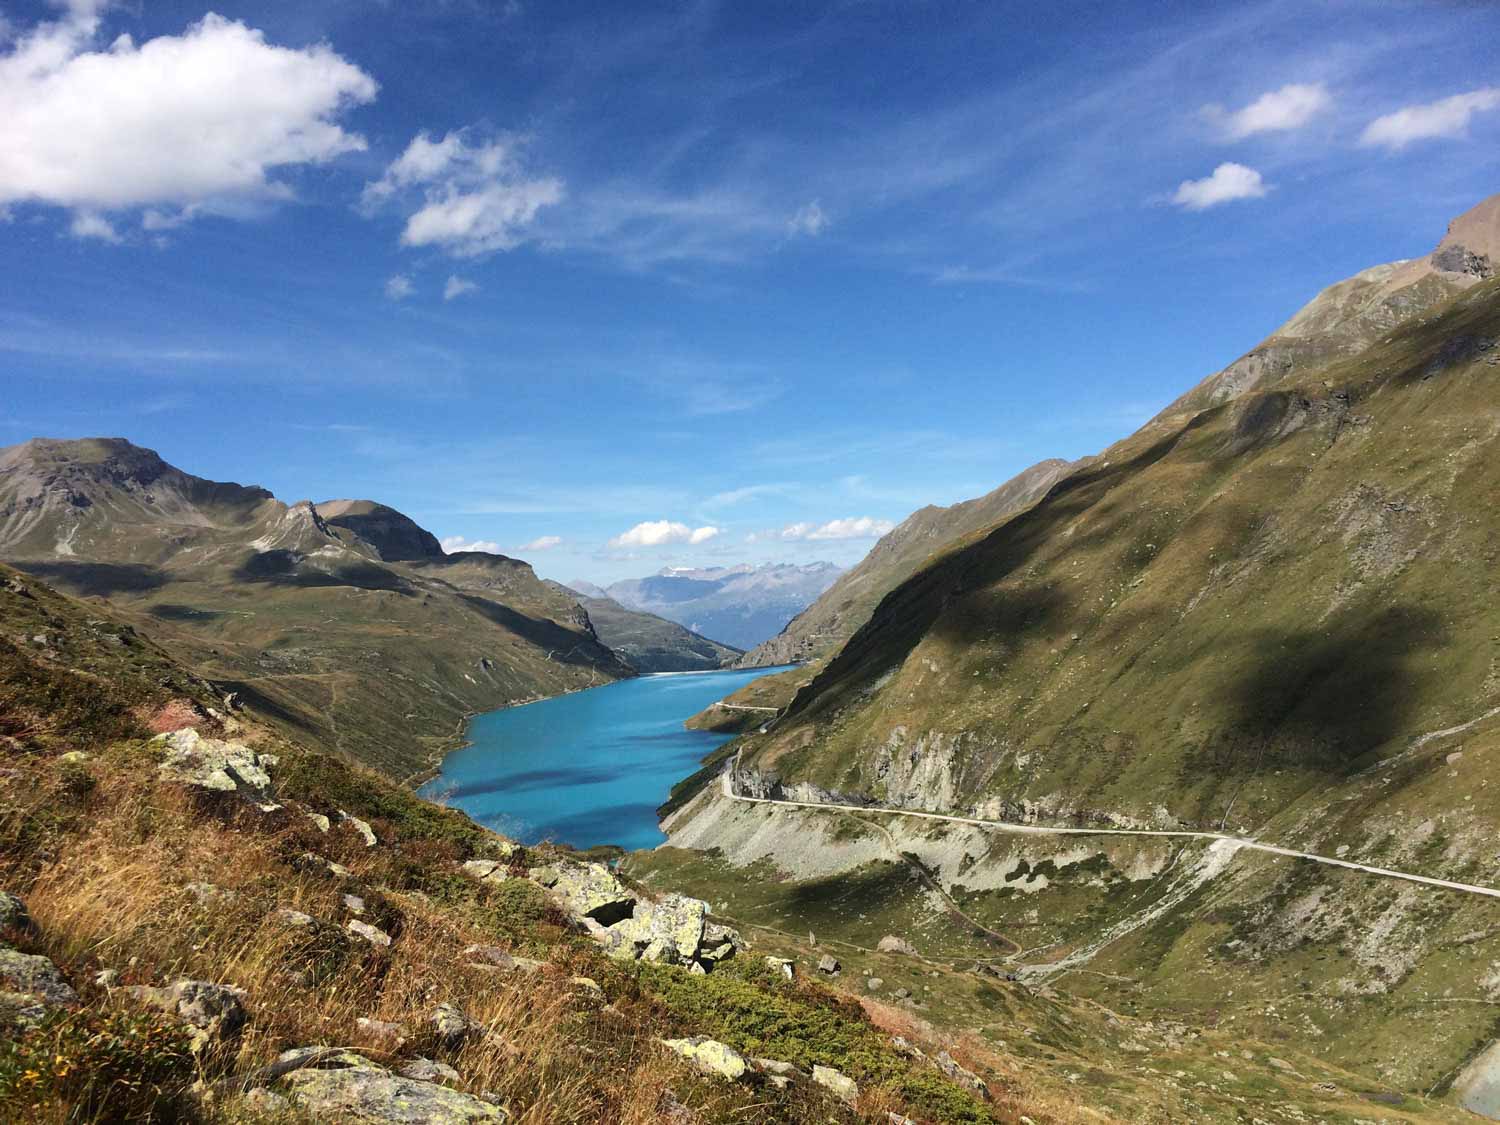 Moiry Lake Hike - Hiking in Switzerland